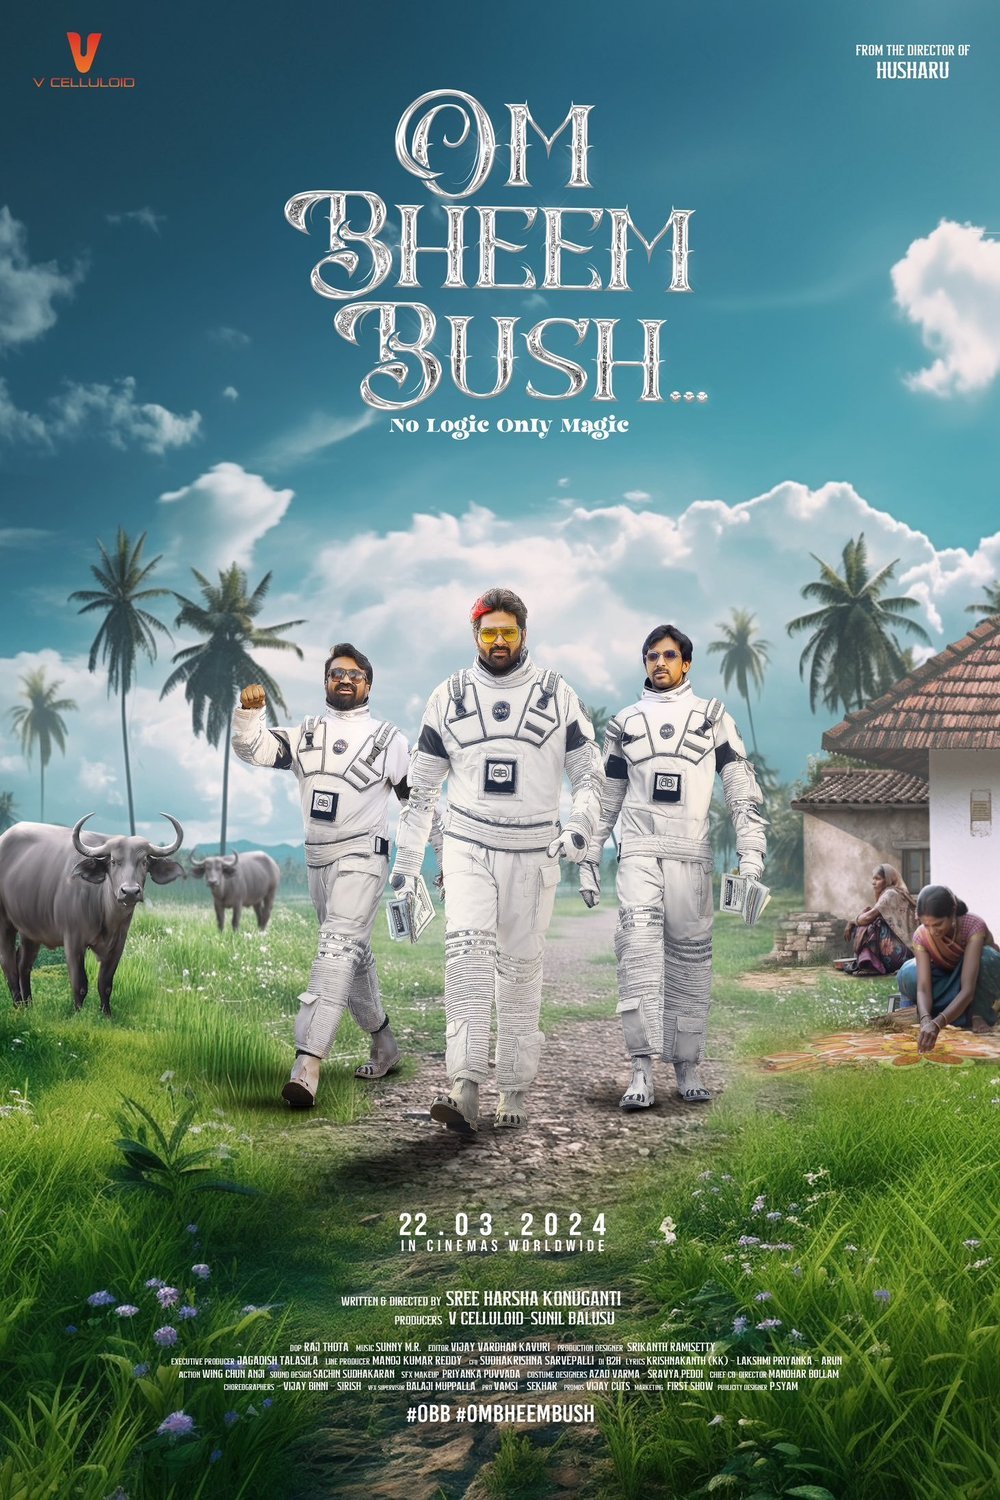 Telugu poster of the movie Om Bheem Bush